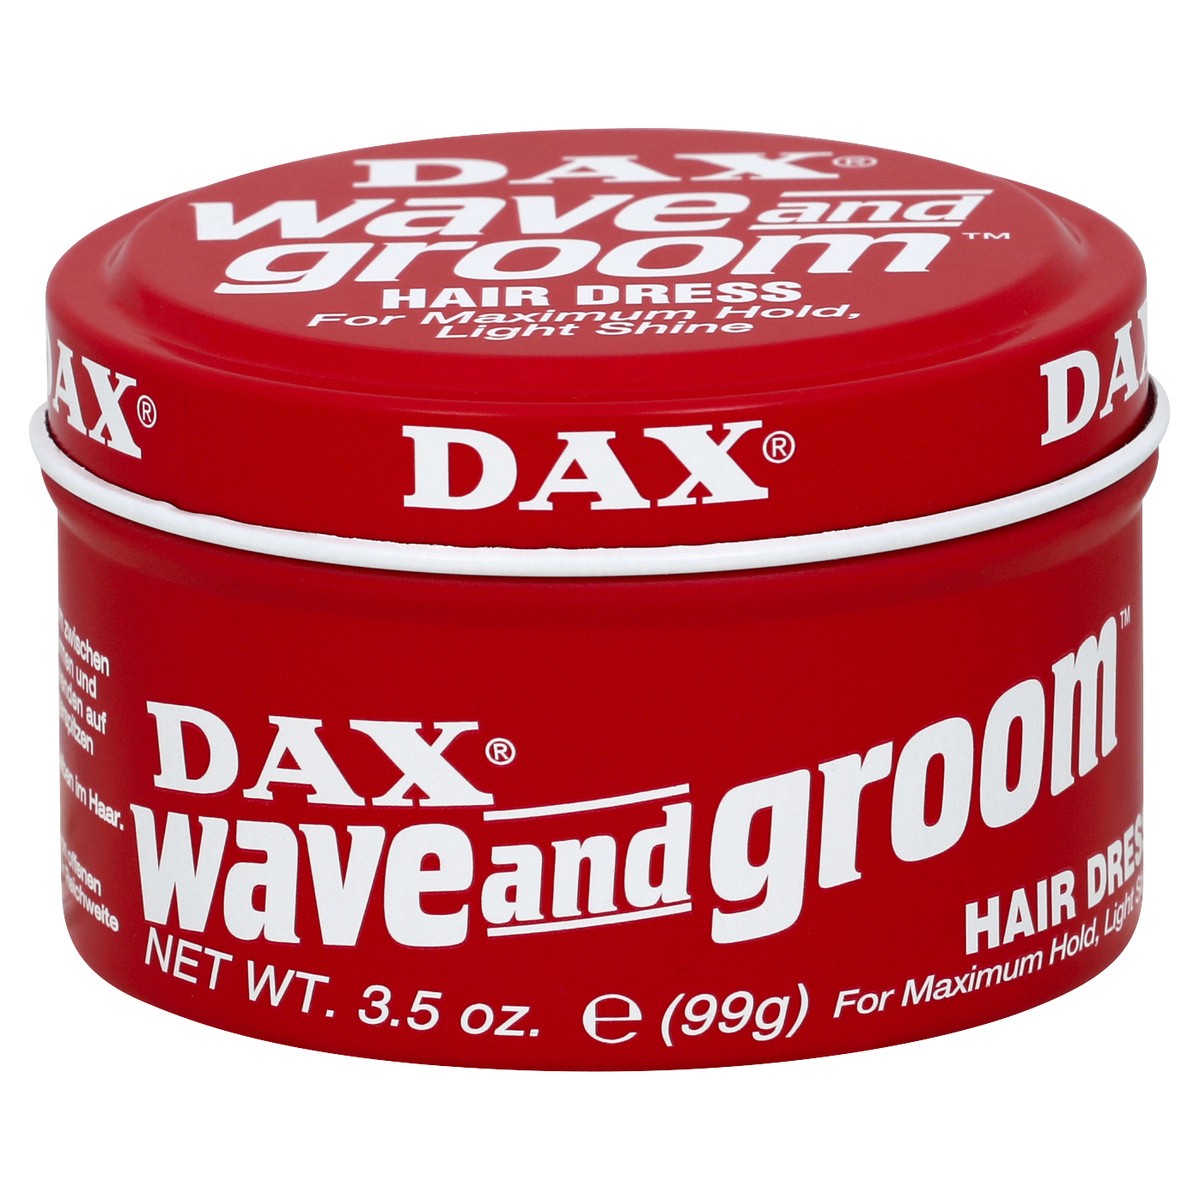 slide 4 of 4, DAX Hair Dress 3.5 oz, 3.5 oz